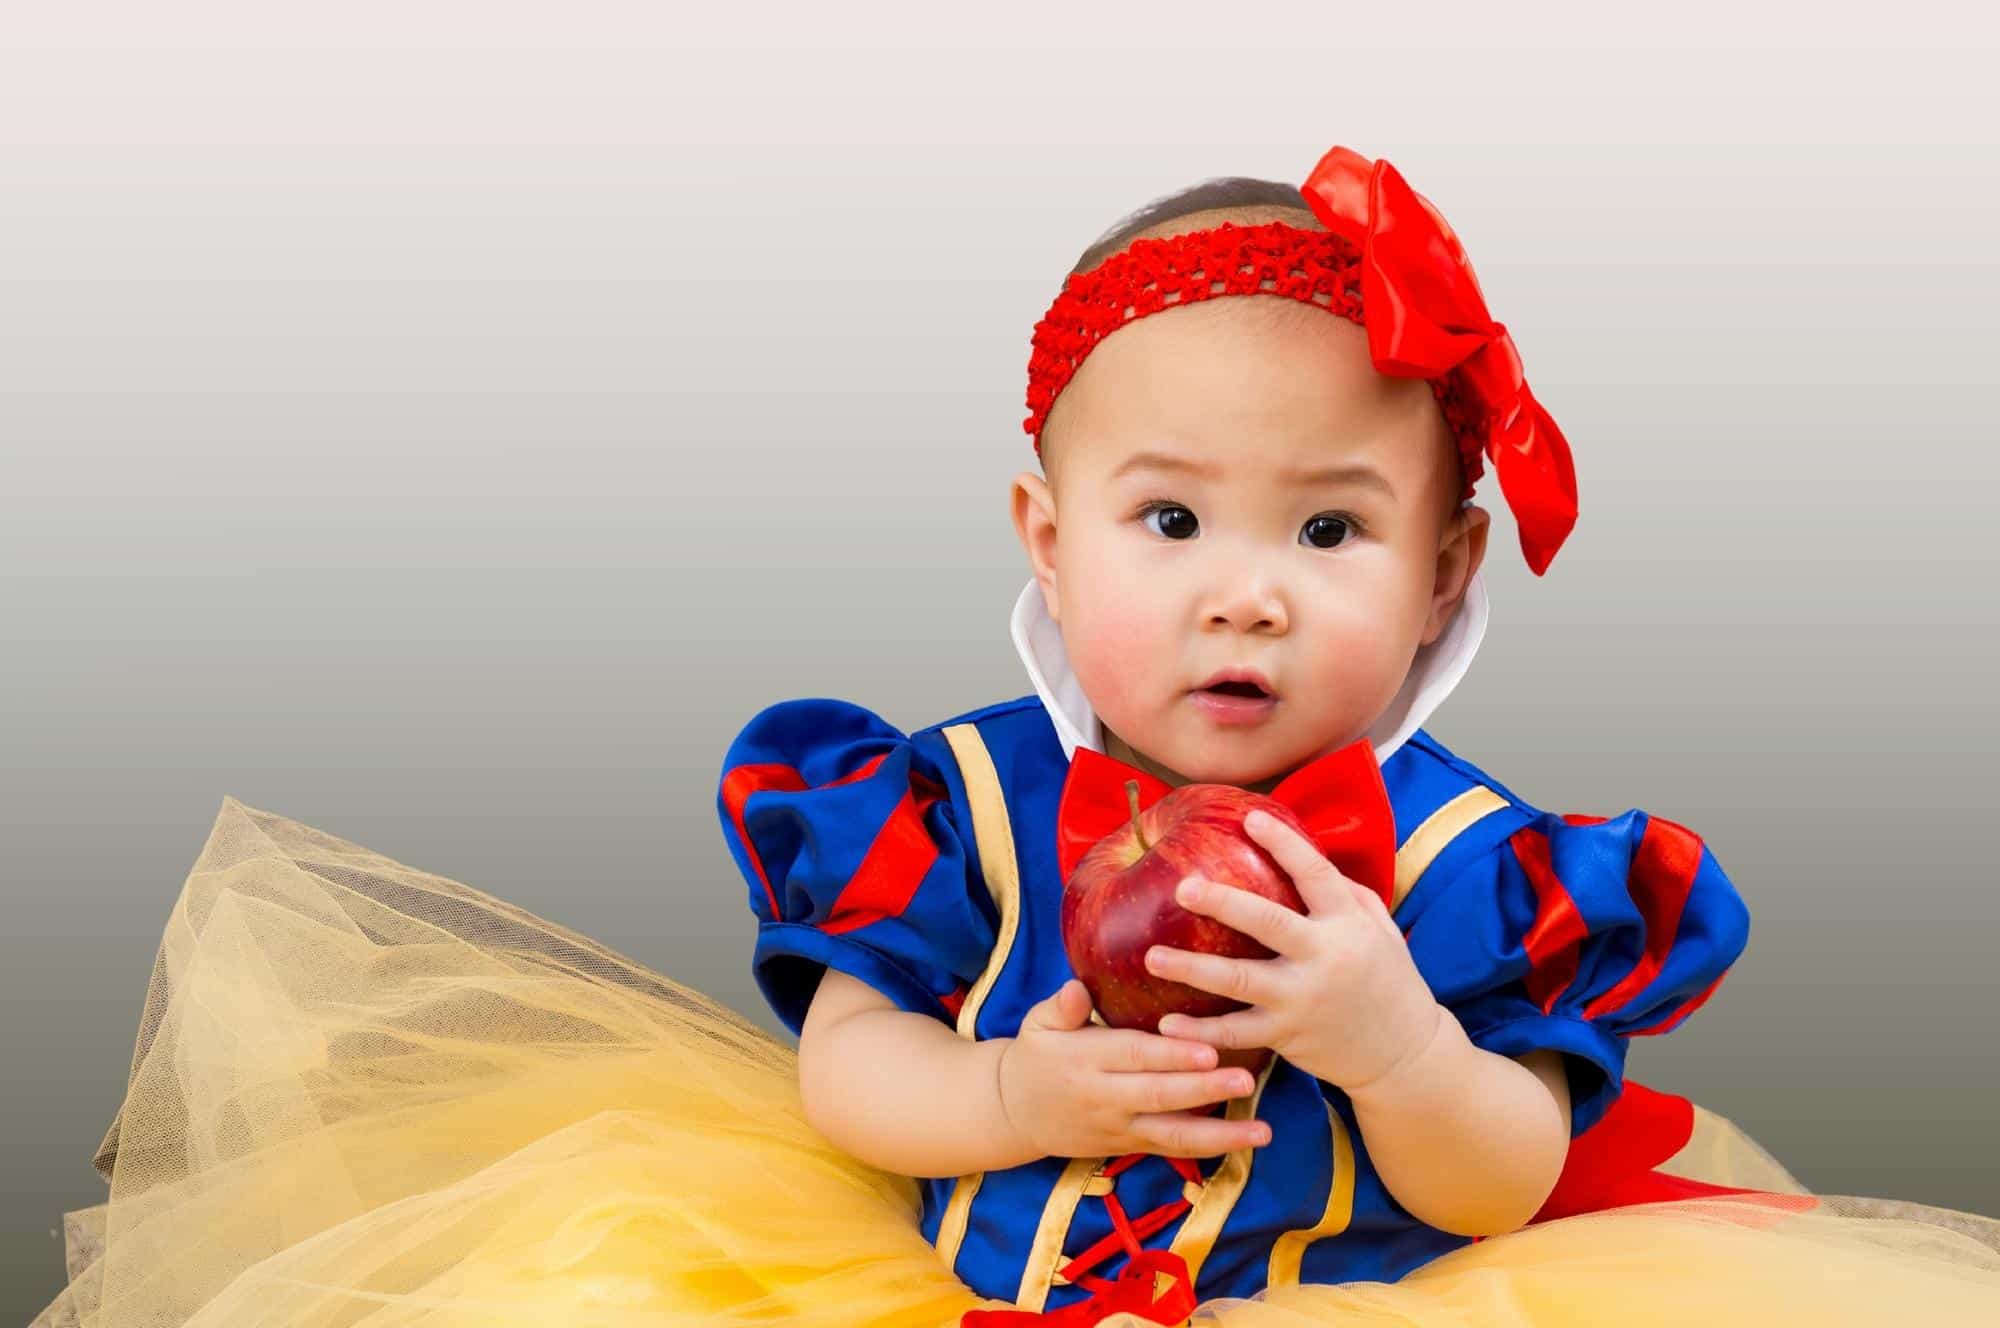 royal baby girl princess dress holding apple